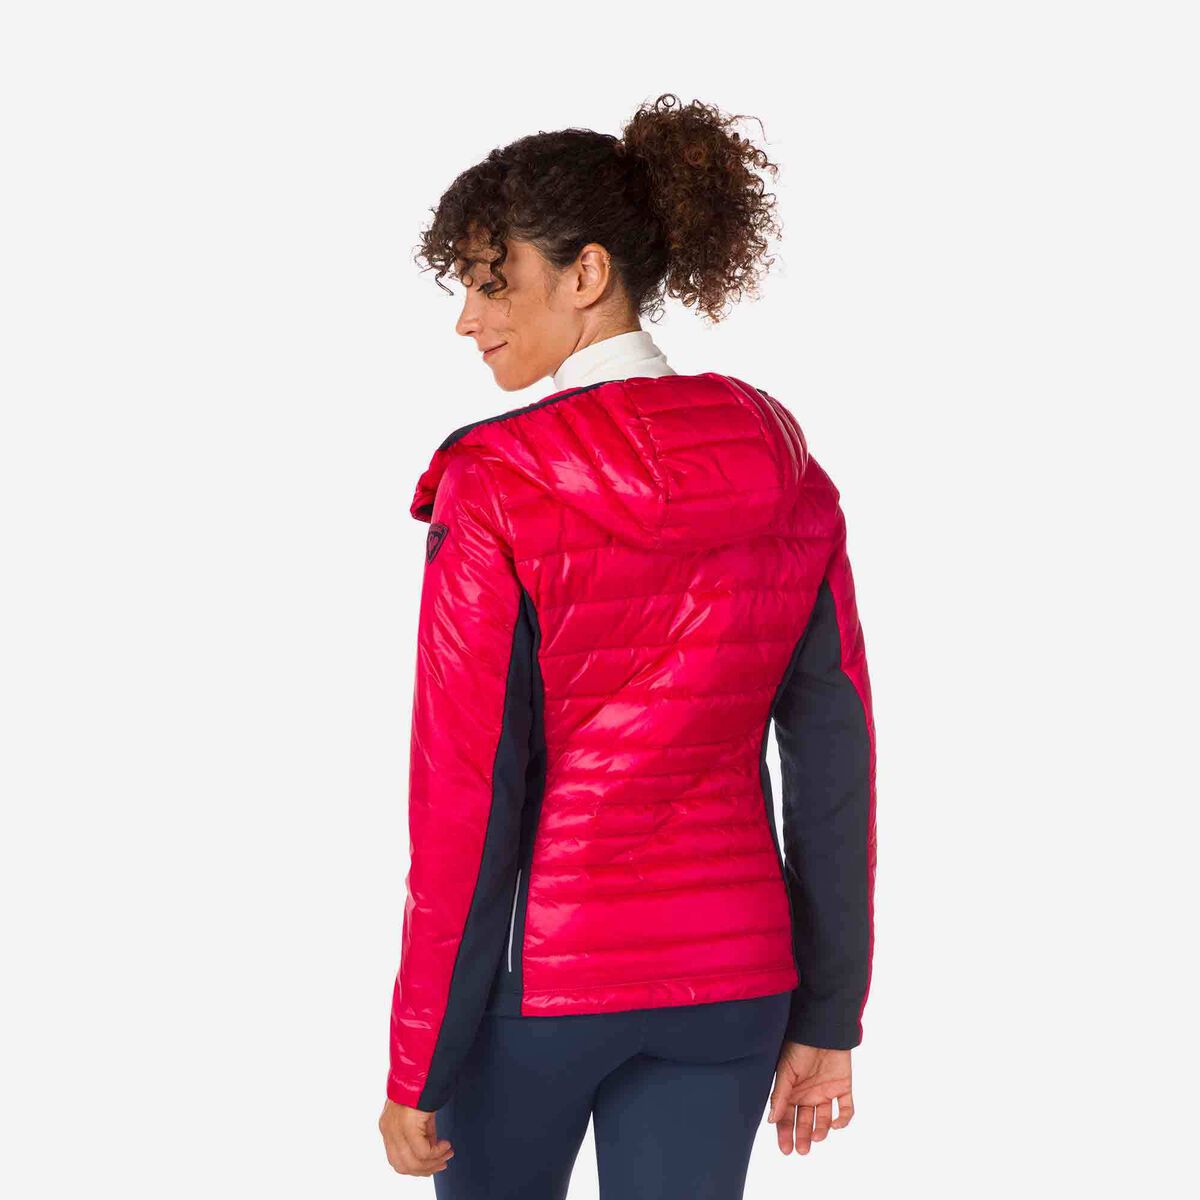 Women's SKPR Hybrid Light Jacket